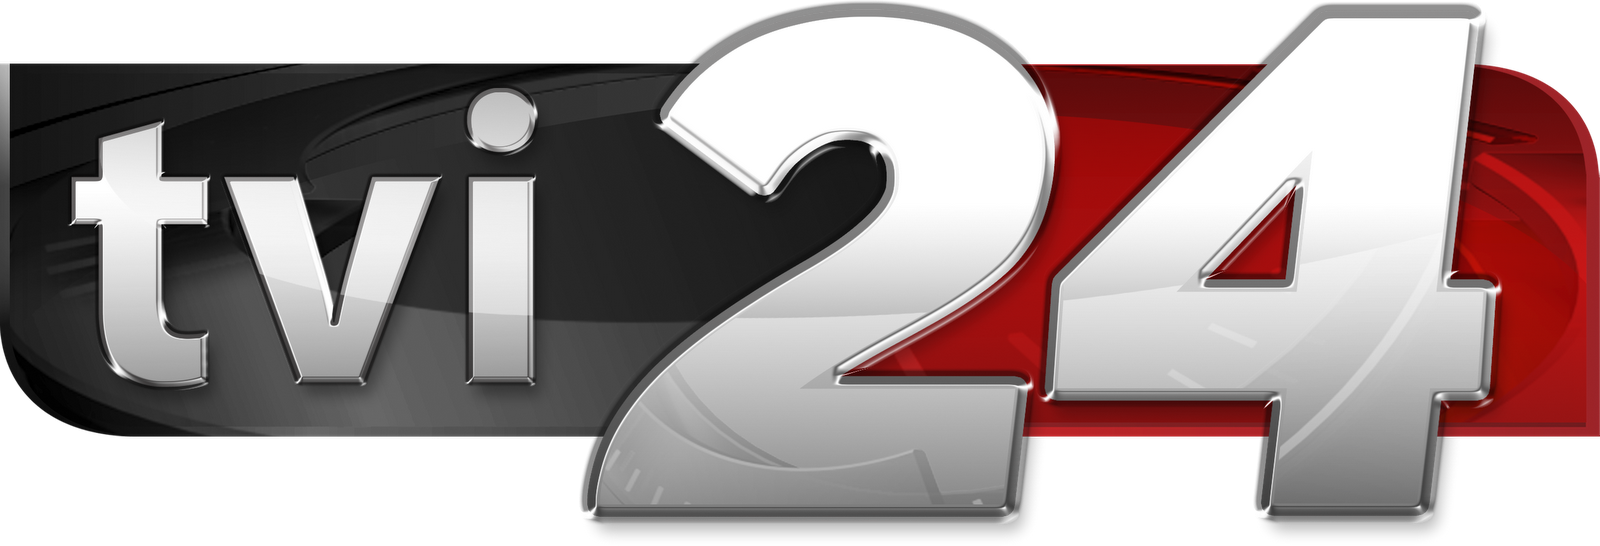 Image result for logo tvi 24 horas